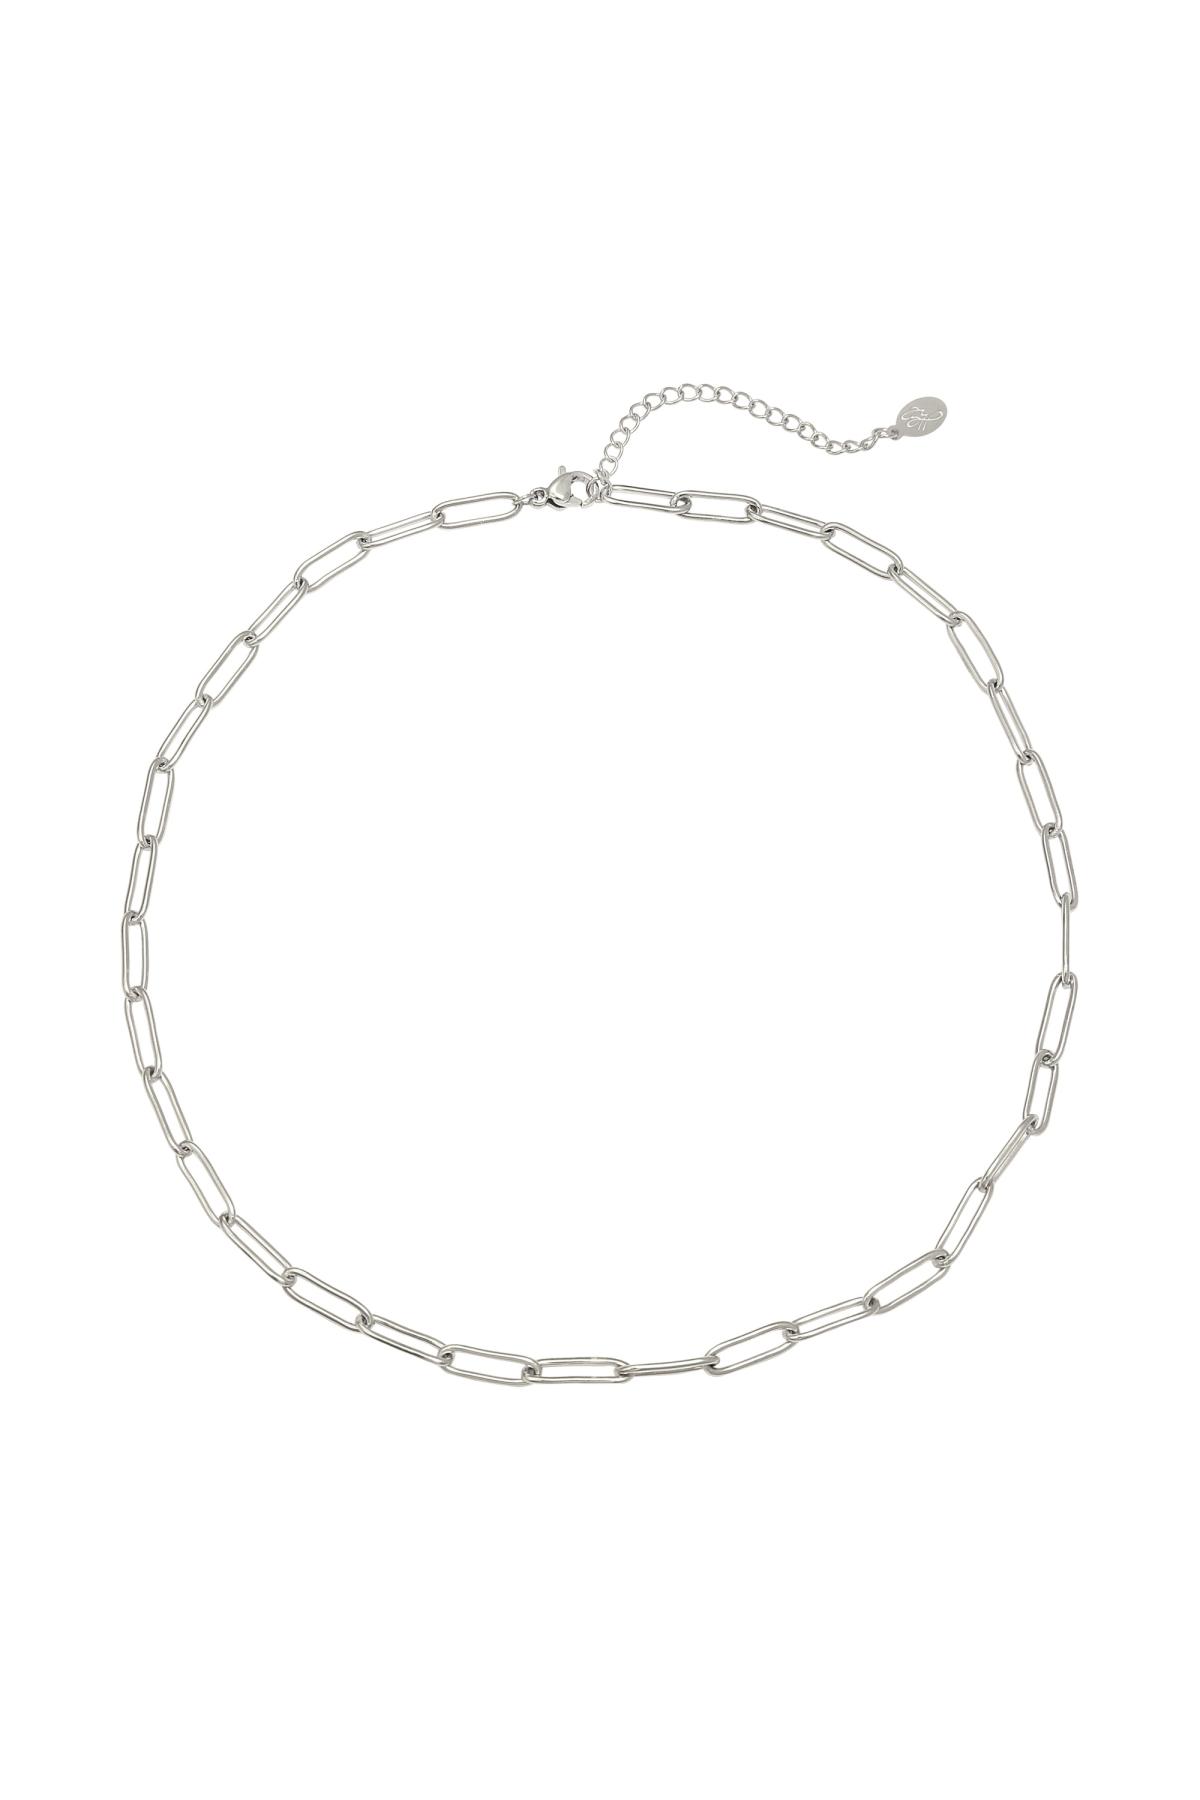 Halskette Chained Up Silber Edelstahl h5 